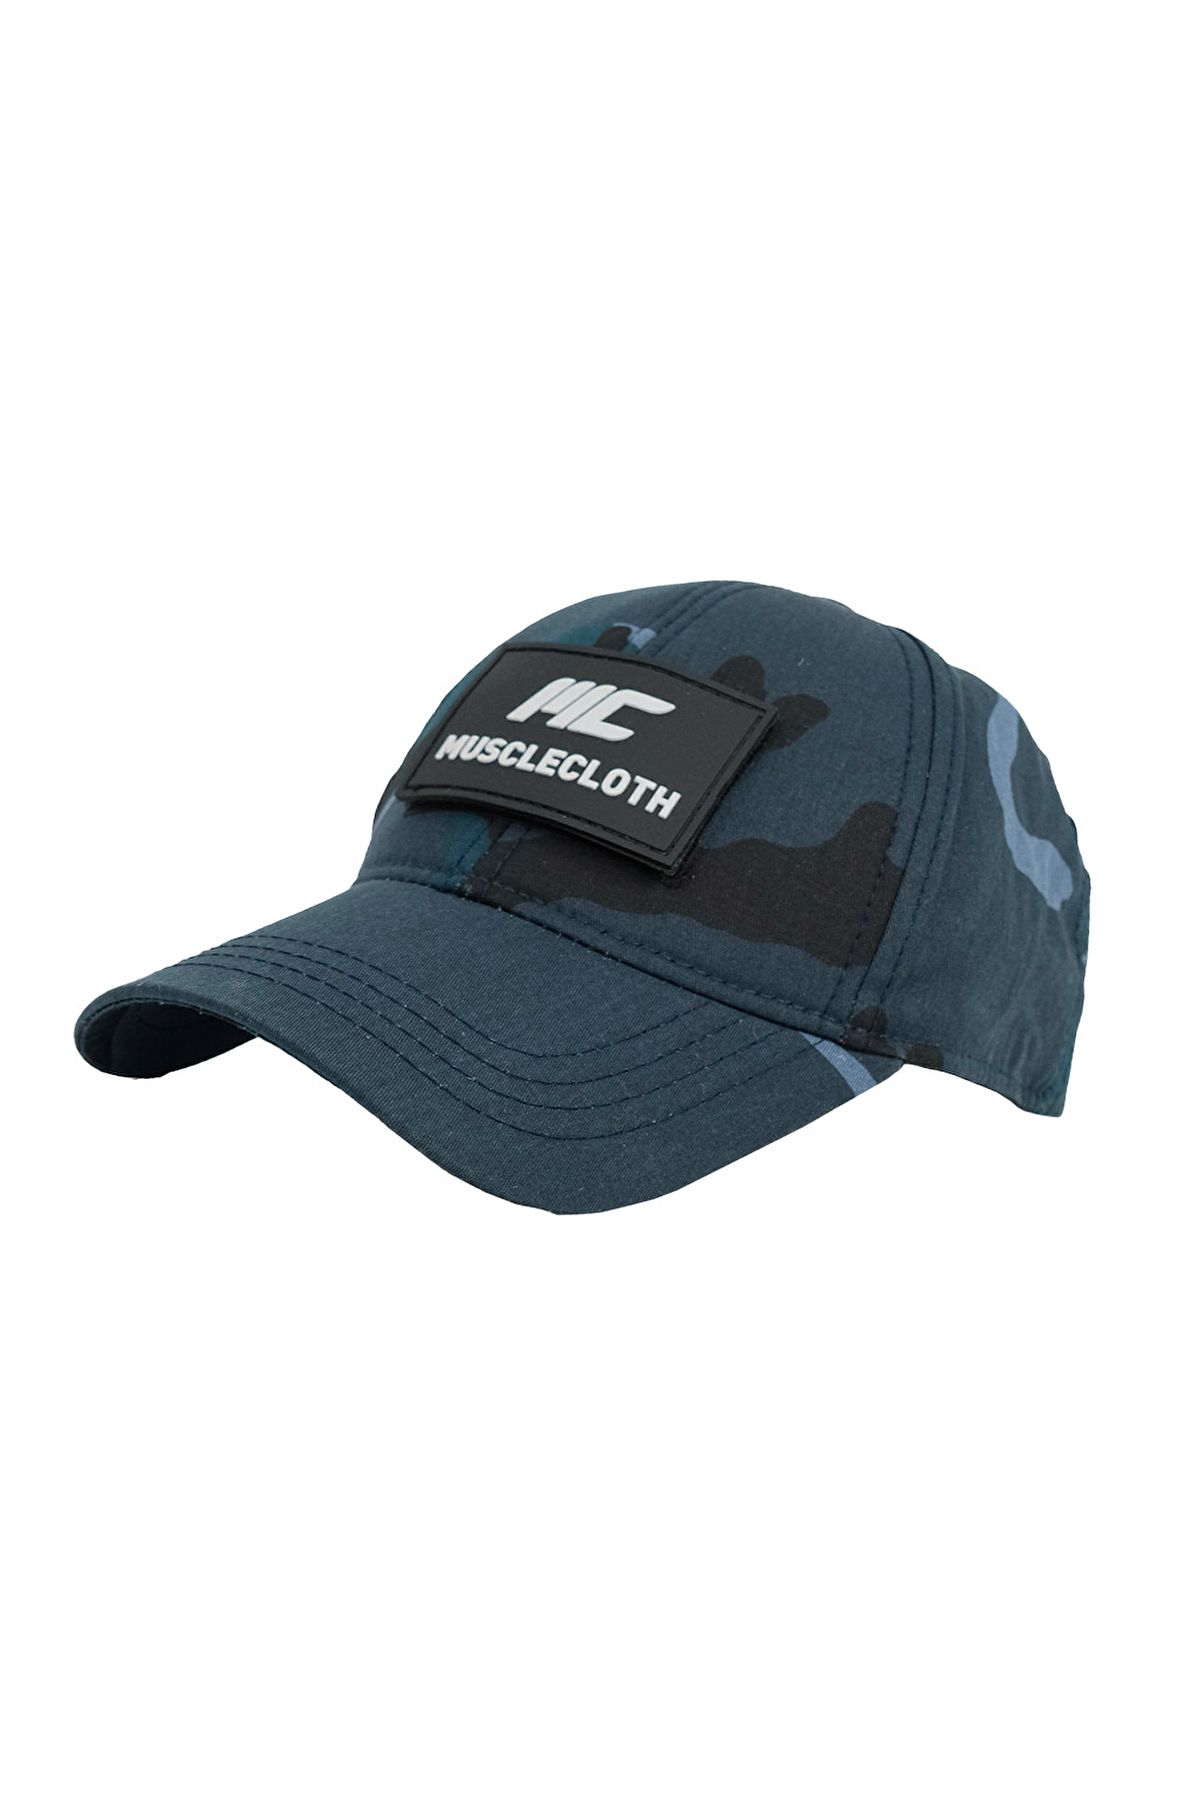 MUSCLECLOTH Tactical Şapka Mavi Kamuflaj